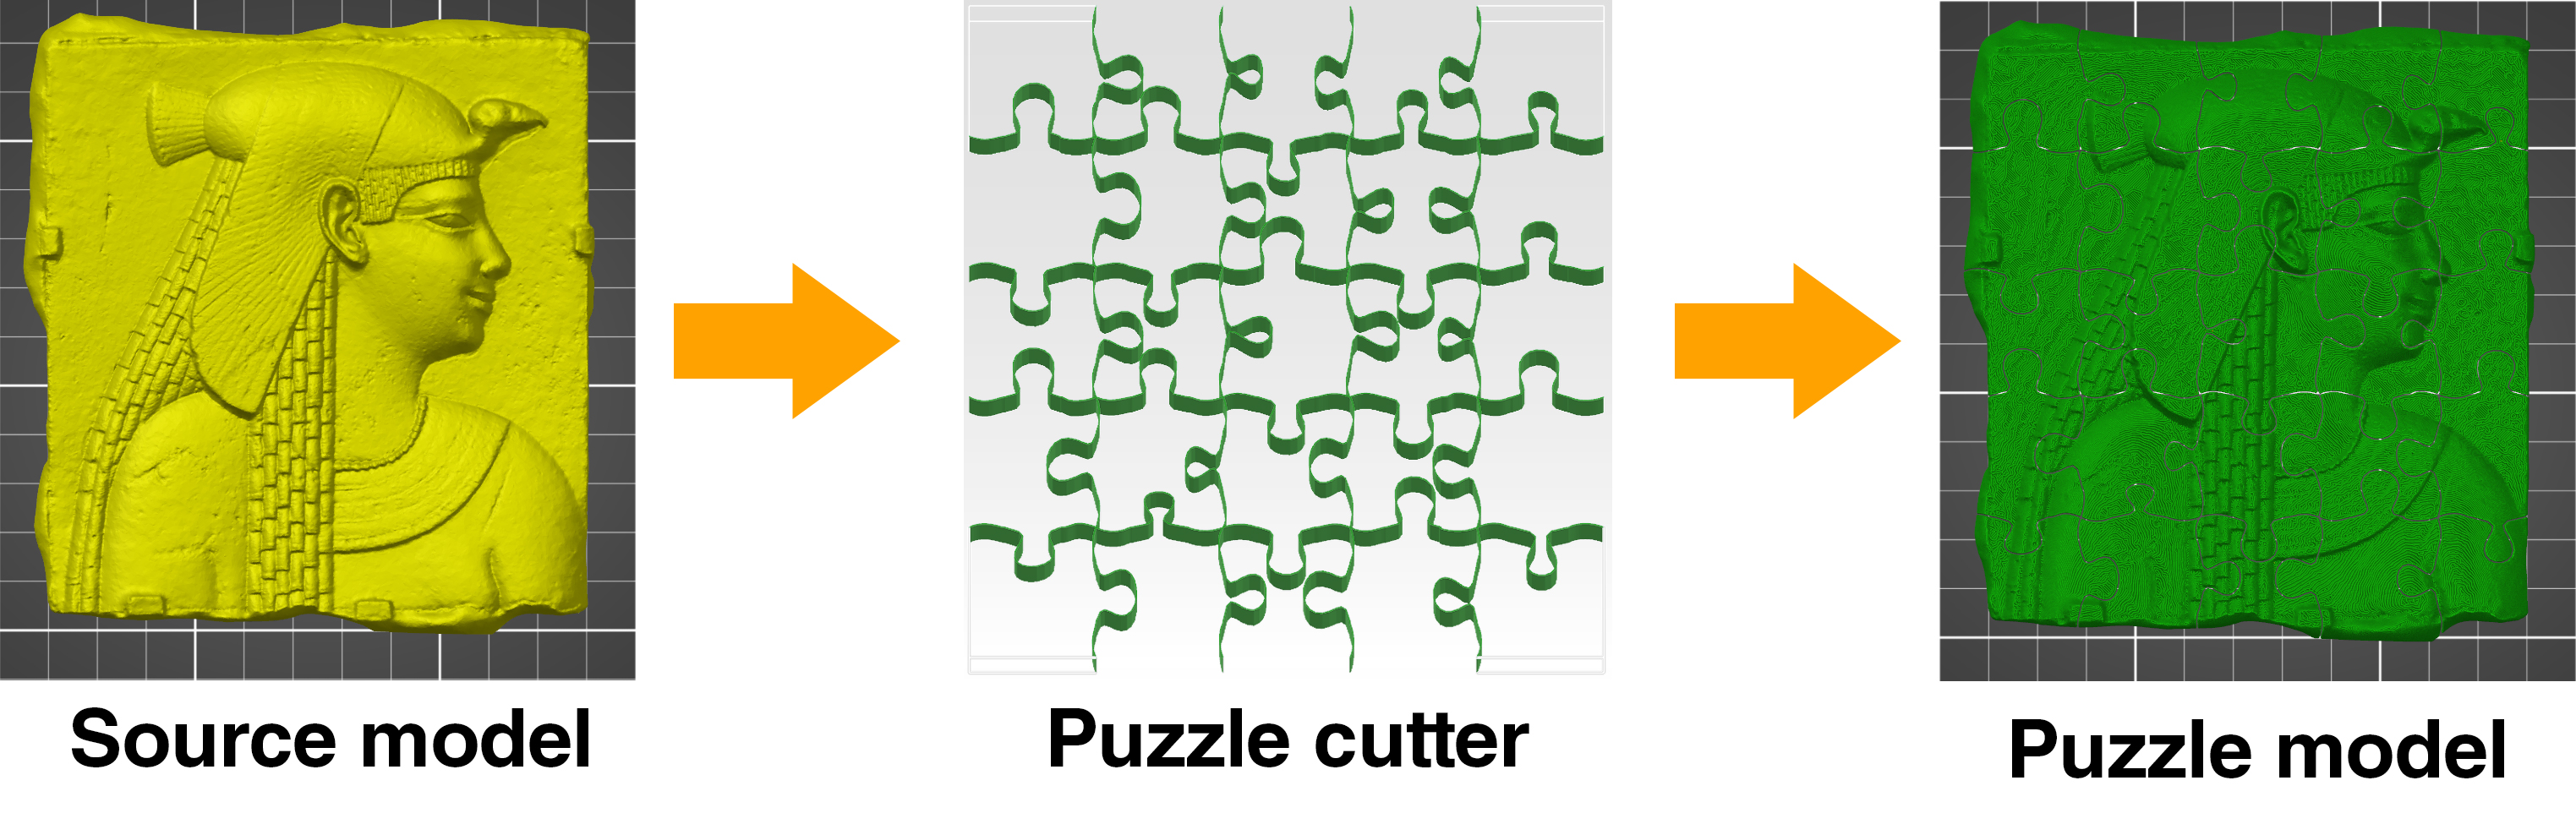 Mijlpaal ik ben verdwaald Gewoon Create and print your own 3D jigsaw puzzles! - Original Prusa 3D Printers